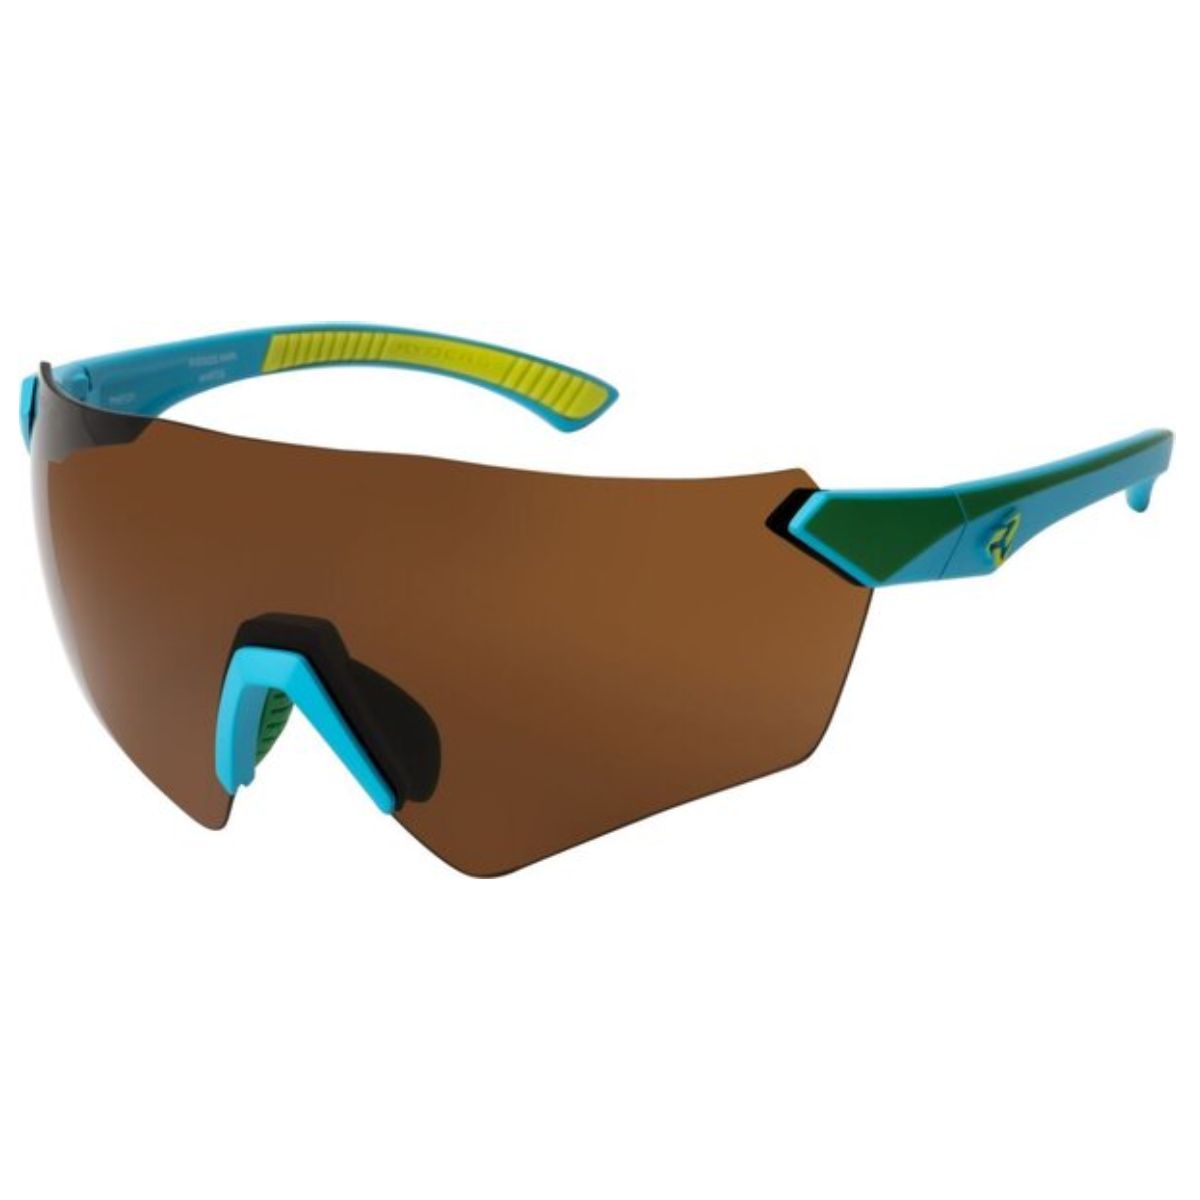 Ryders Main Blue Green Sunglasses